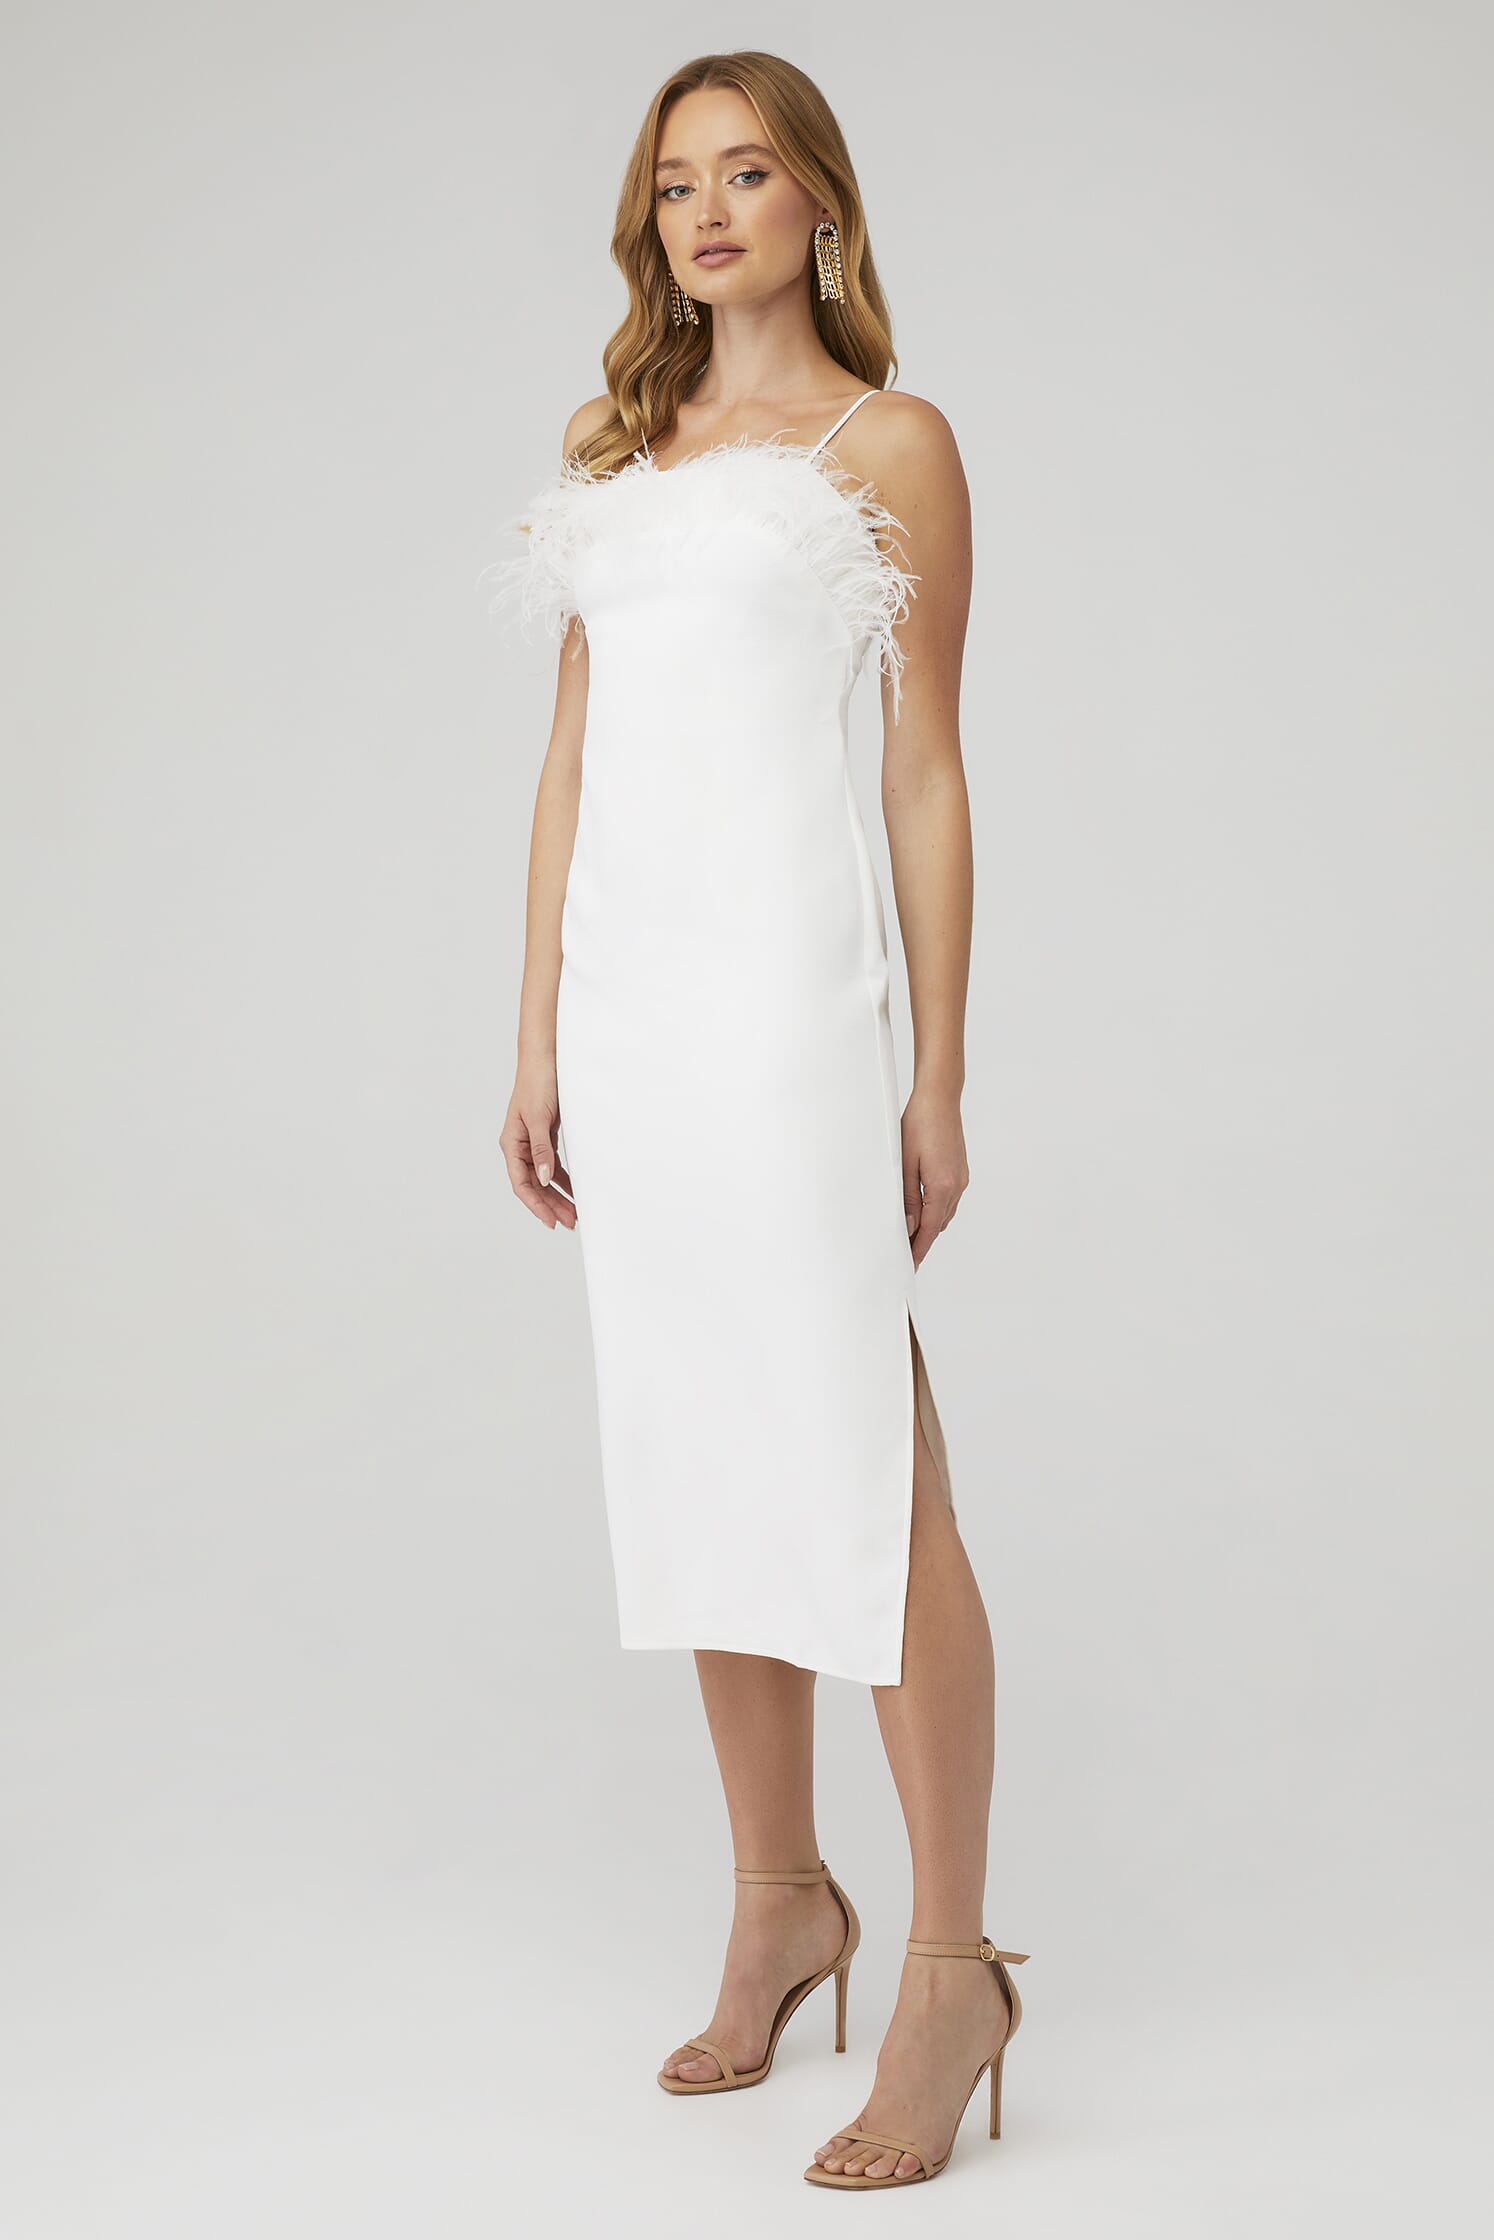 ELLIATT | Harley Dress in White| FashionPass